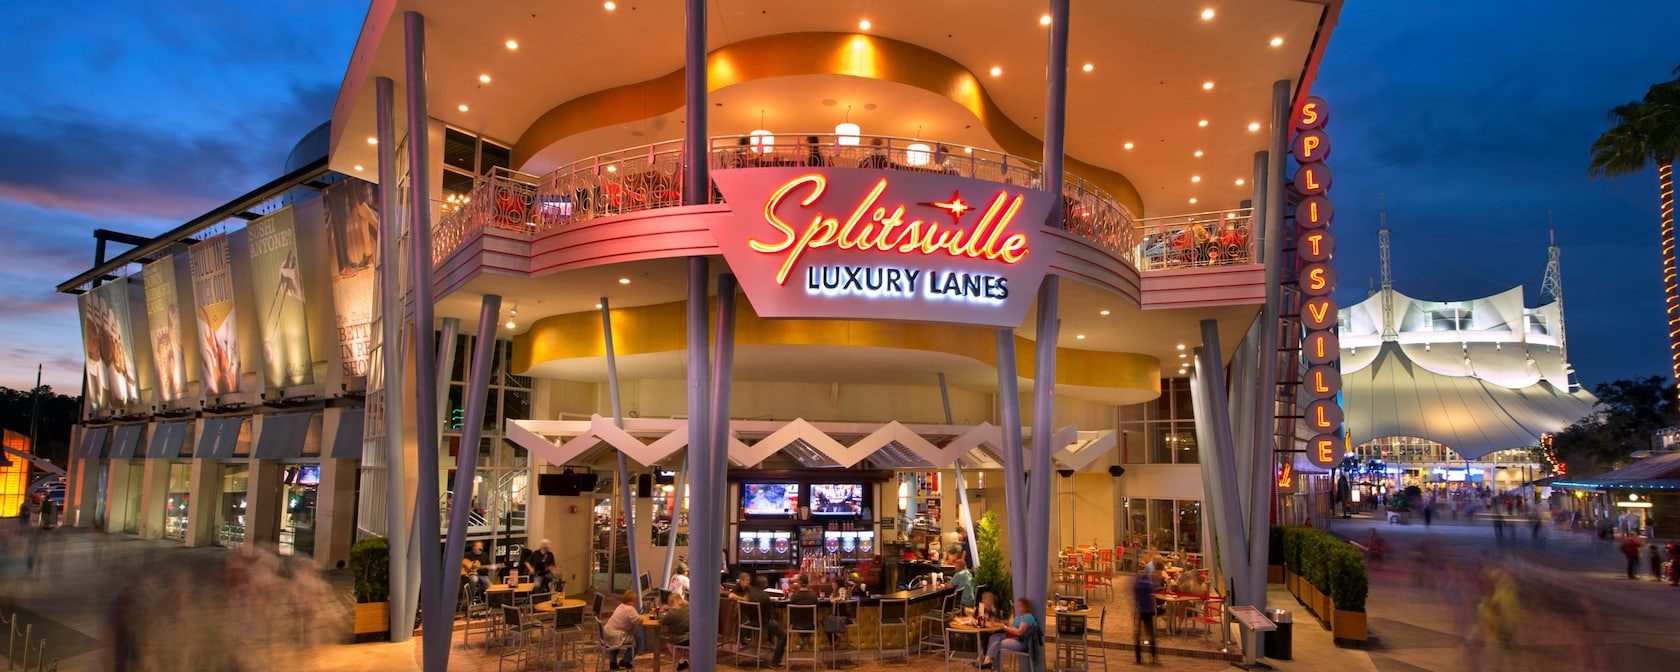 Splitsville Terminates All Employees Due to Disney Springs